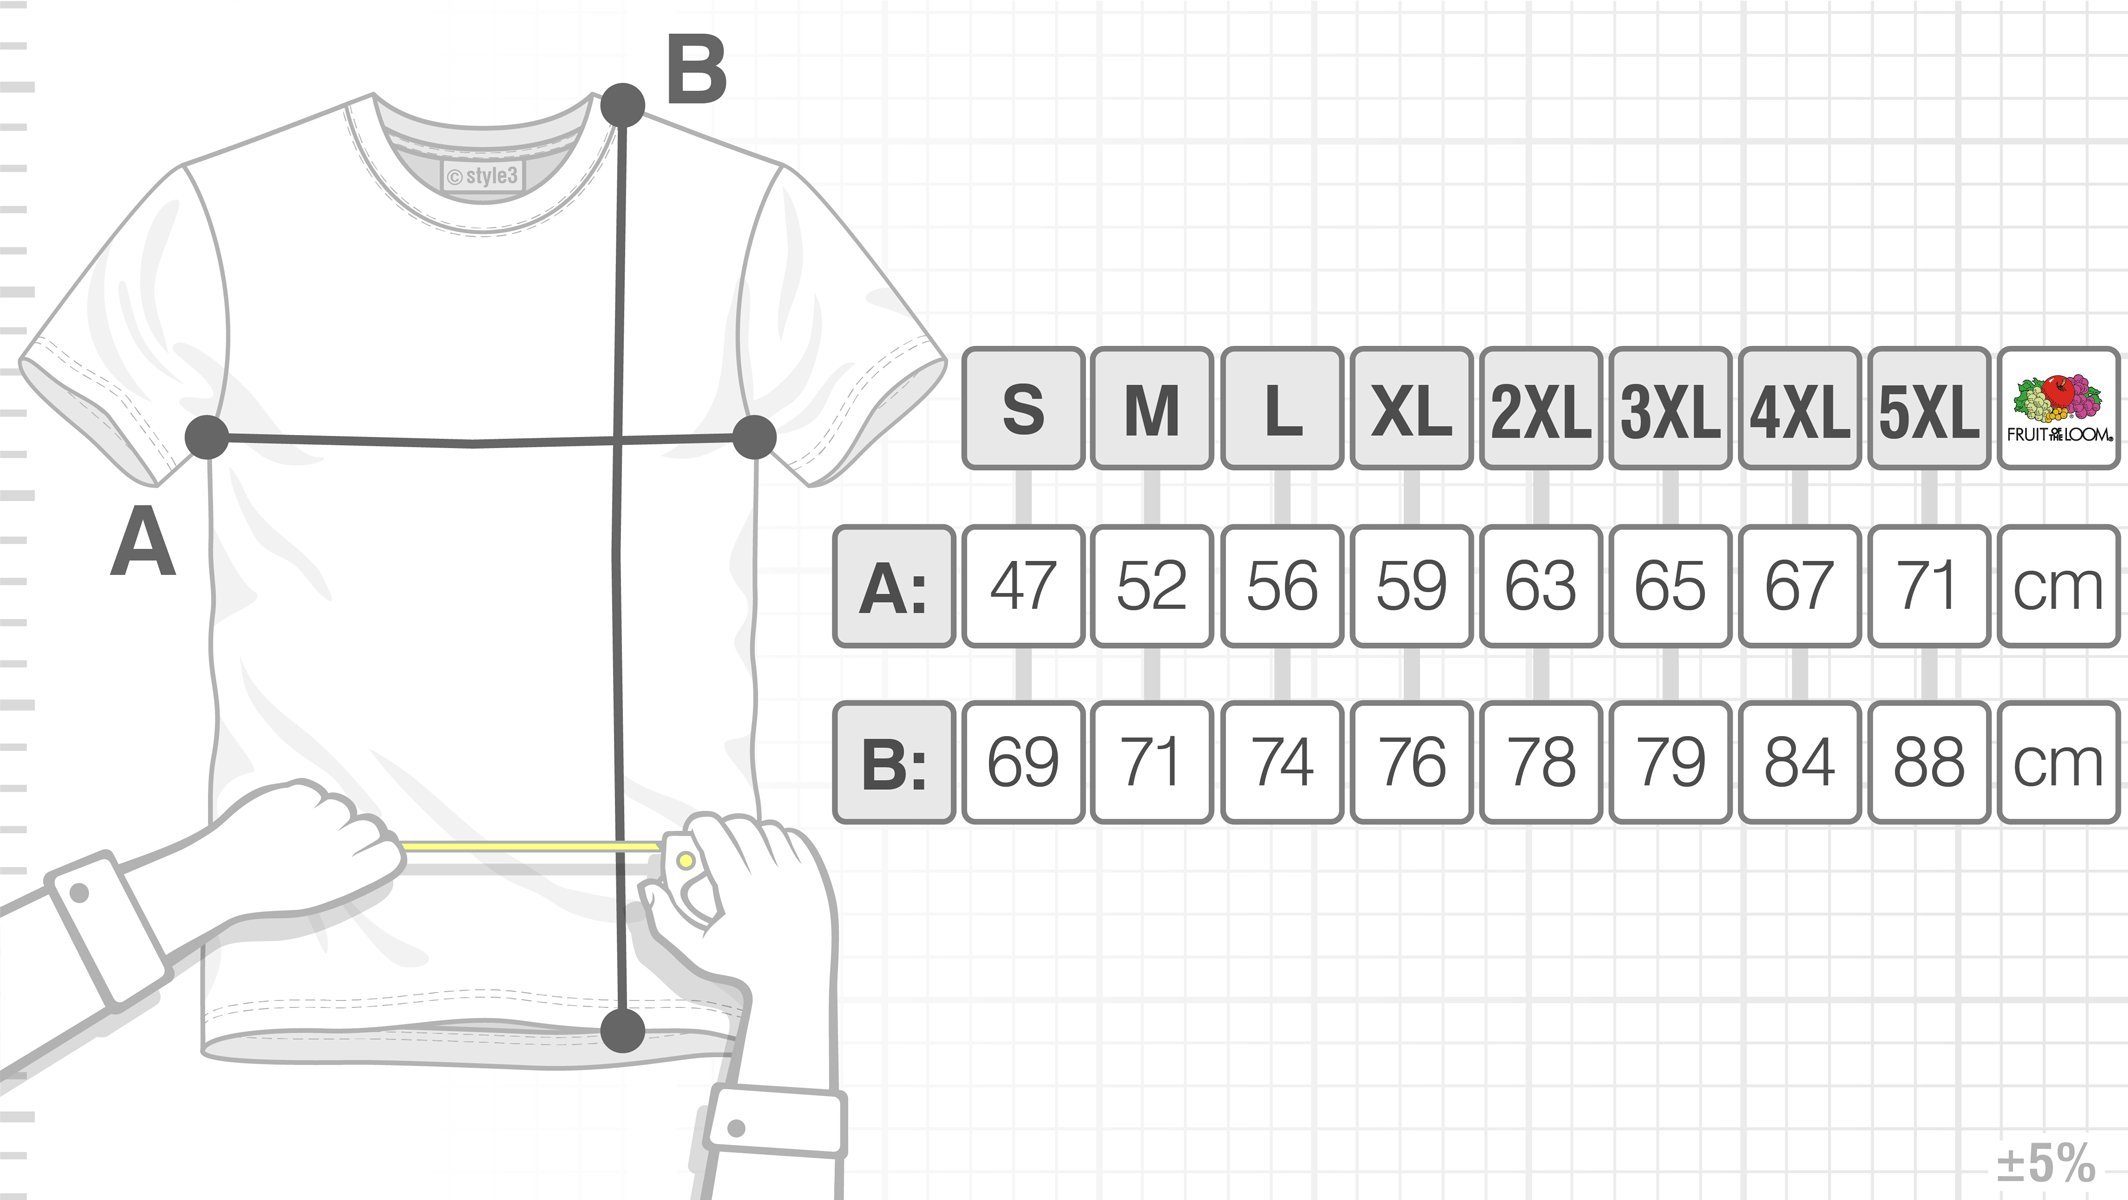 style3 Print-Shirt Herren T-Shirt Jungen Boy Life is a zelda weiß mario Gamer Game Konsole Spiel Pixel